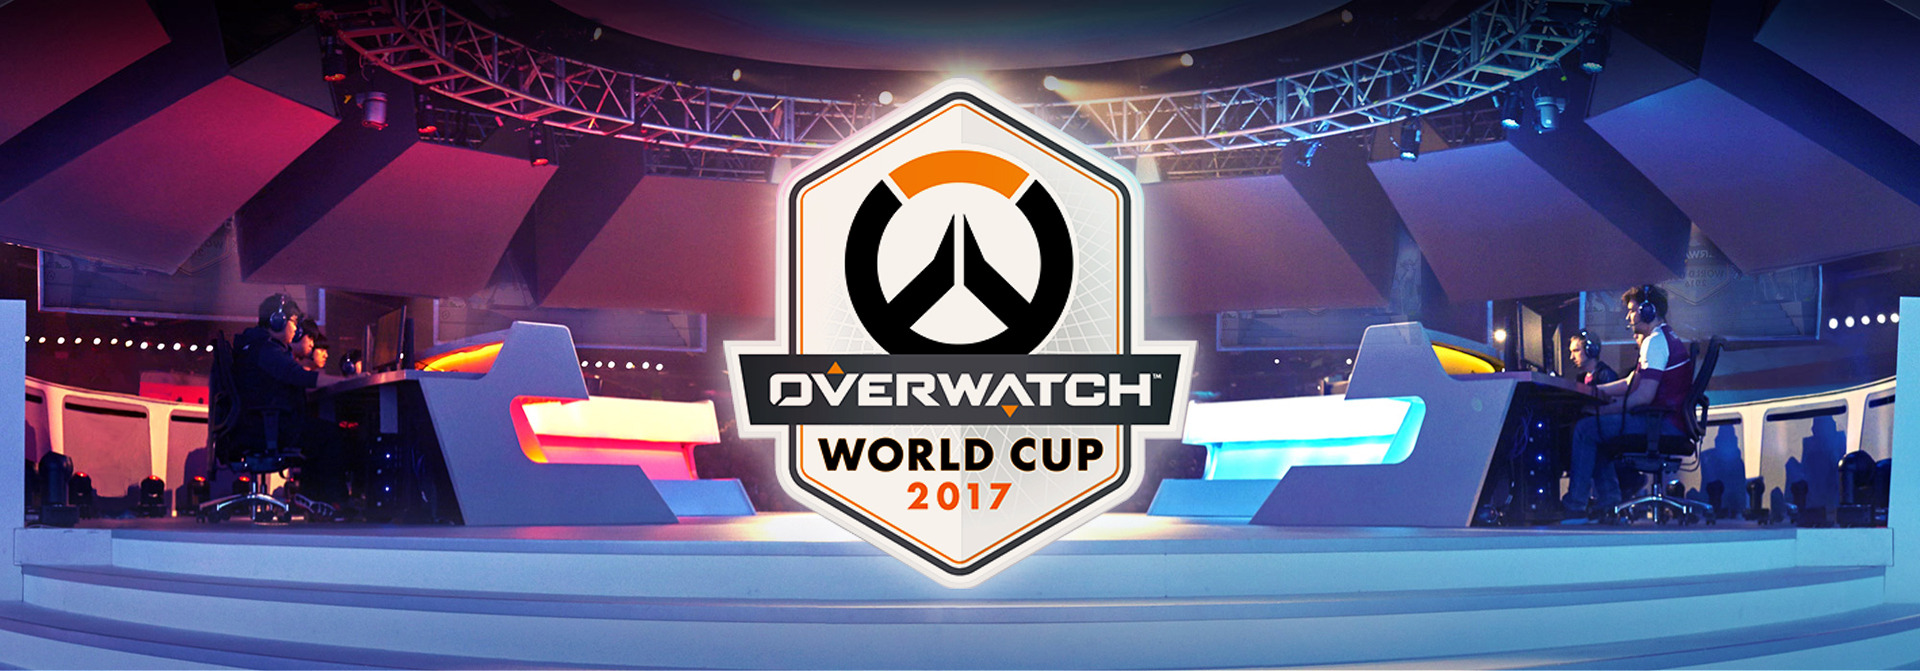 Blizzard公式世界大会 オーバーウォッチ ワールドカップ 17 開催決定 Game Spark 国内 海外ゲーム情報サイト